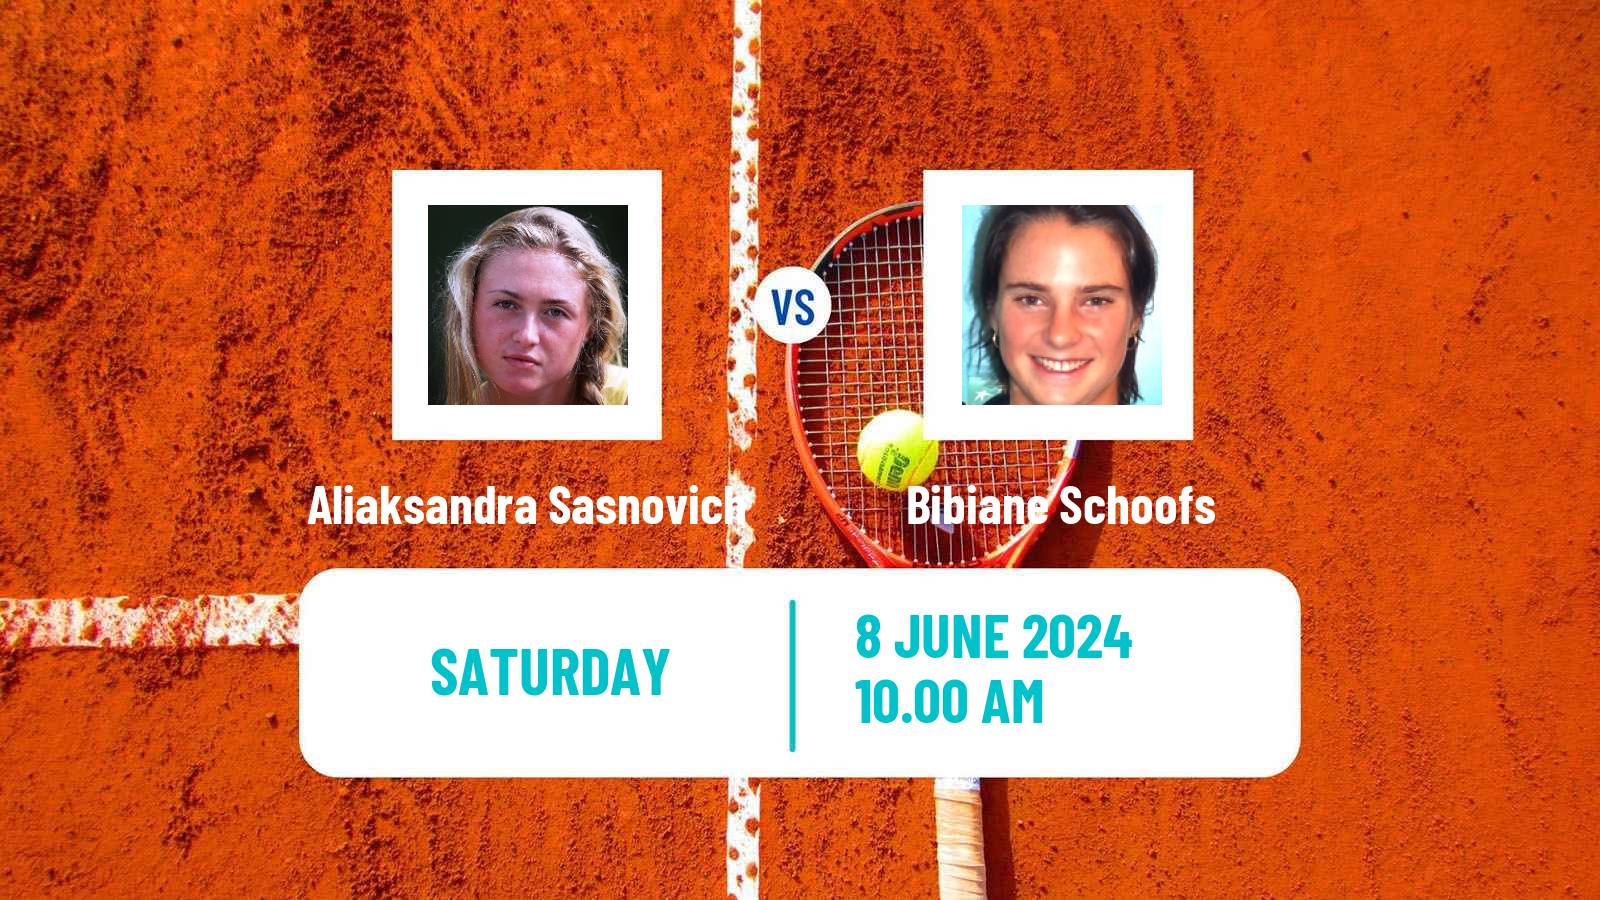 Tennis WTA Hertogenbosch Aliaksandra Sasnovich - Bibiane Schoofs